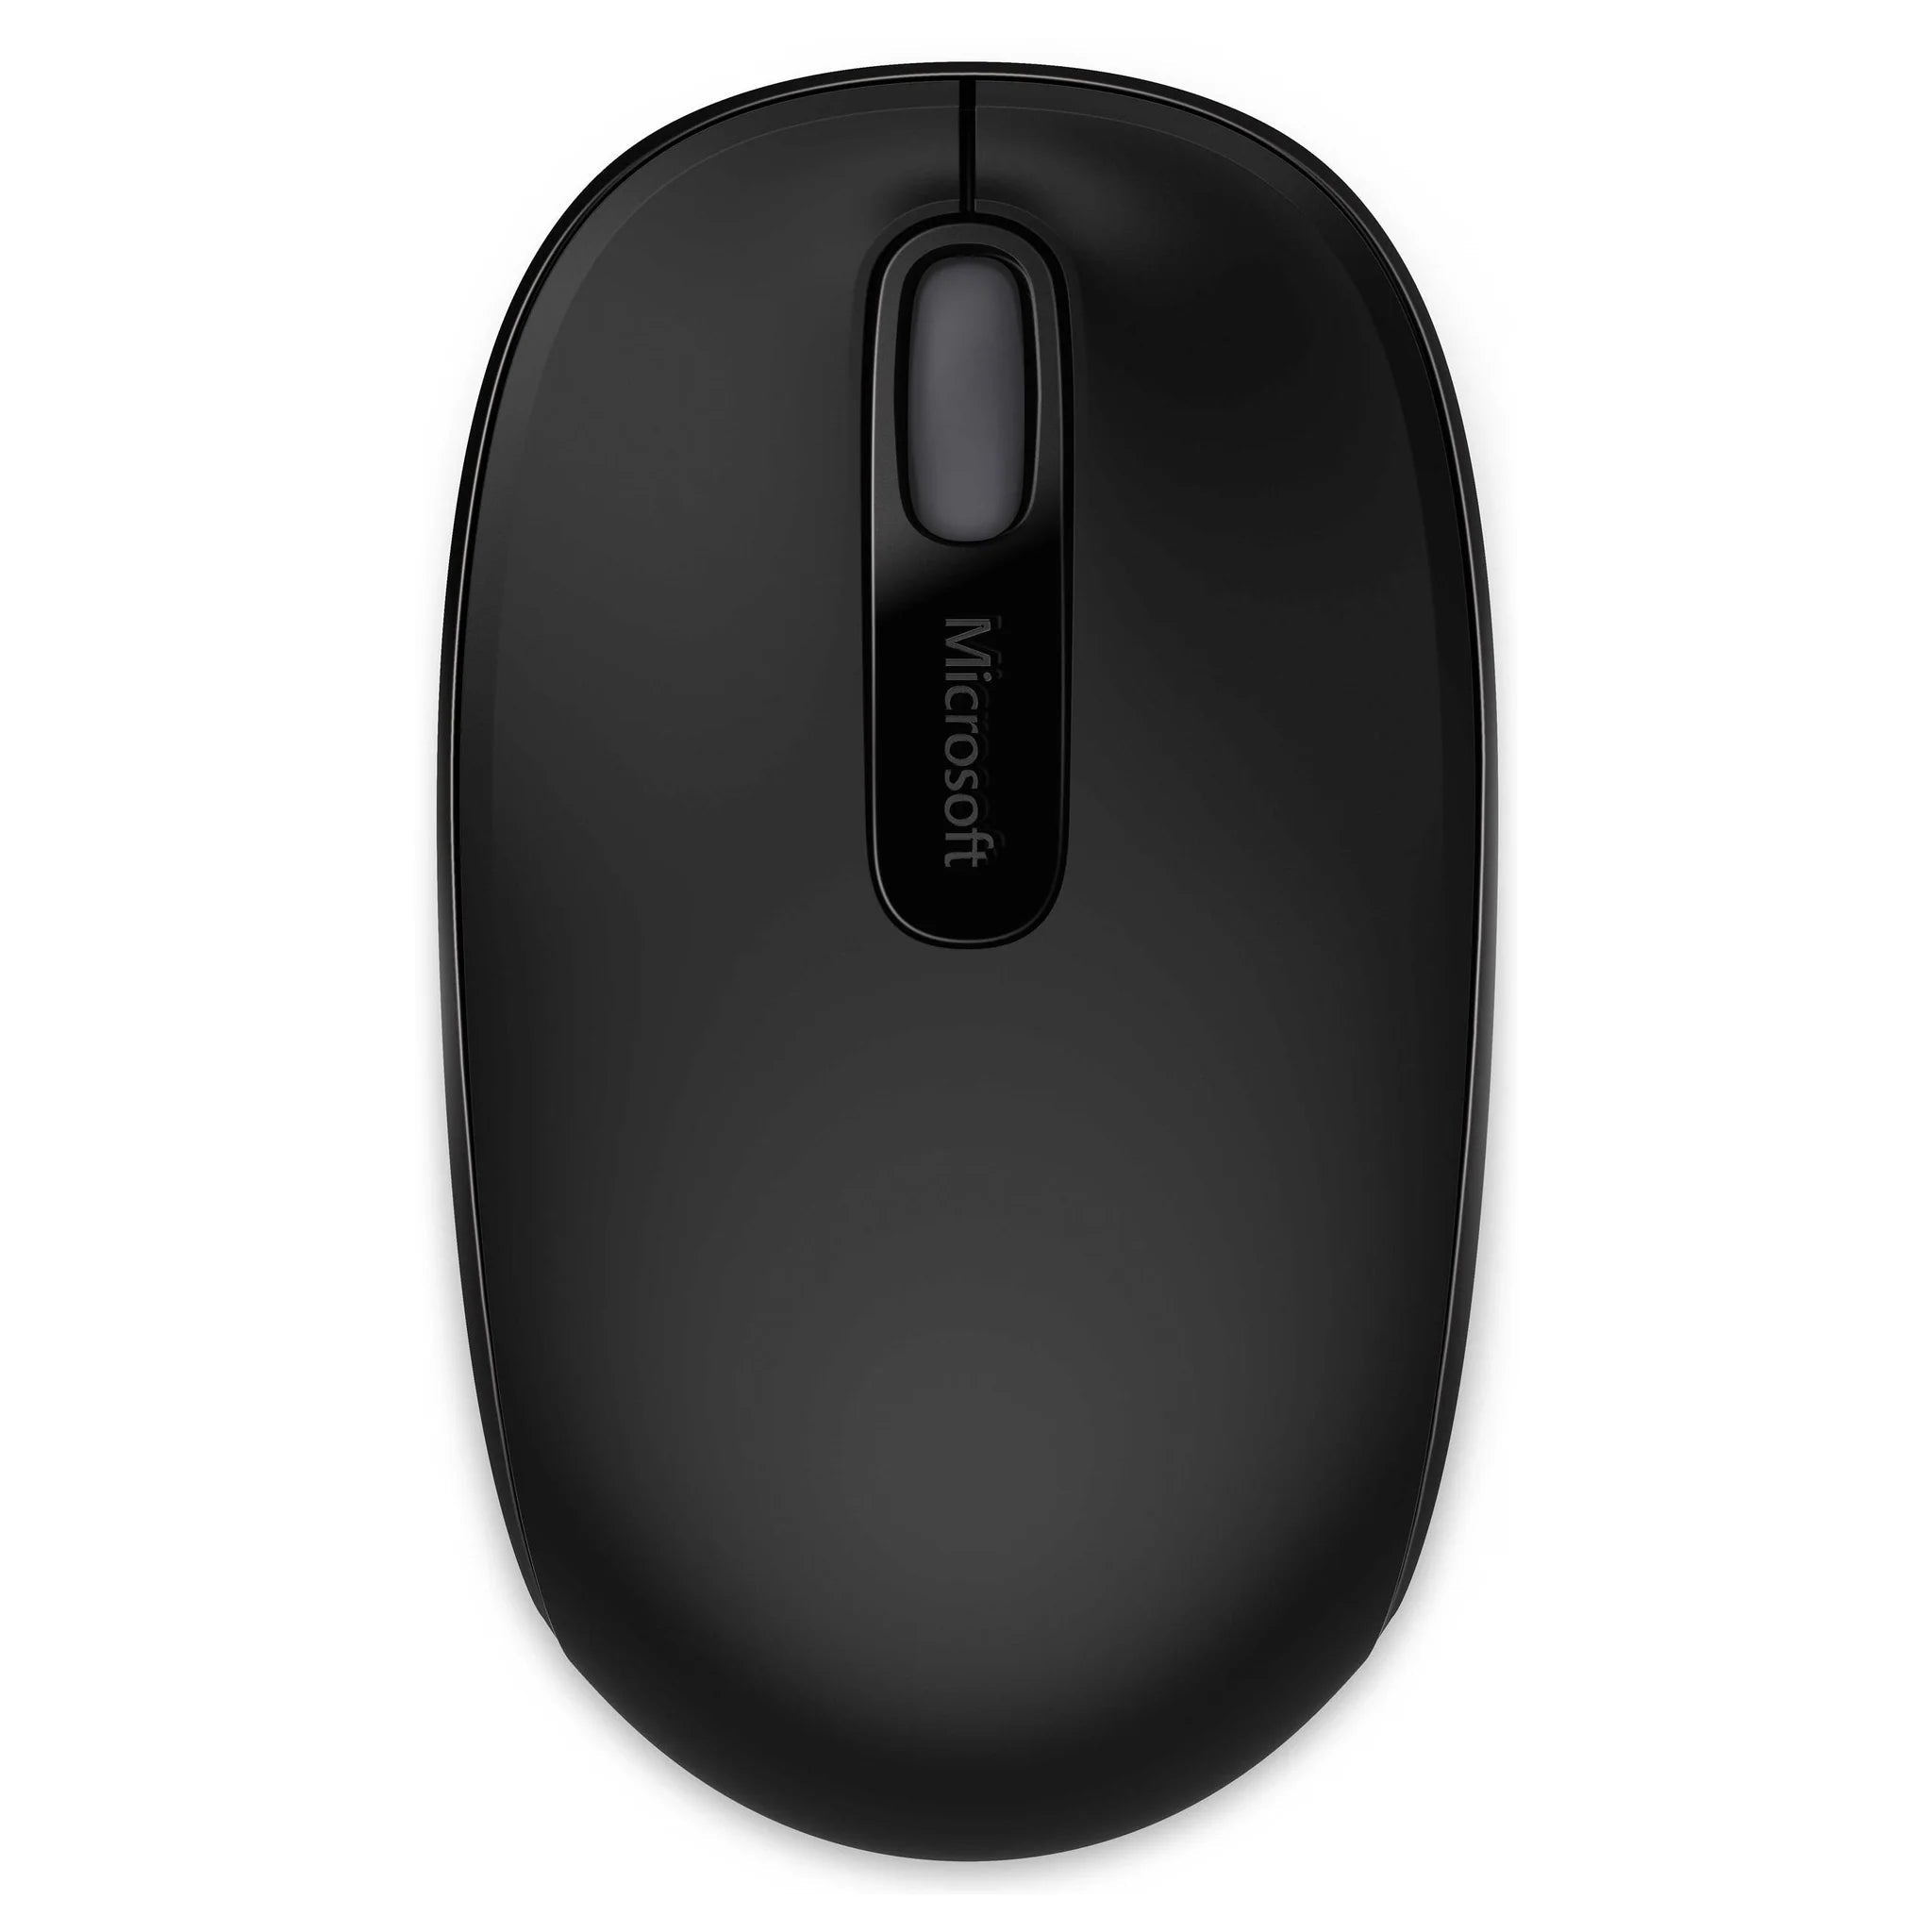 Mouse Microsoft Wireless Mobile 1850 U7Z-00001 - Negro